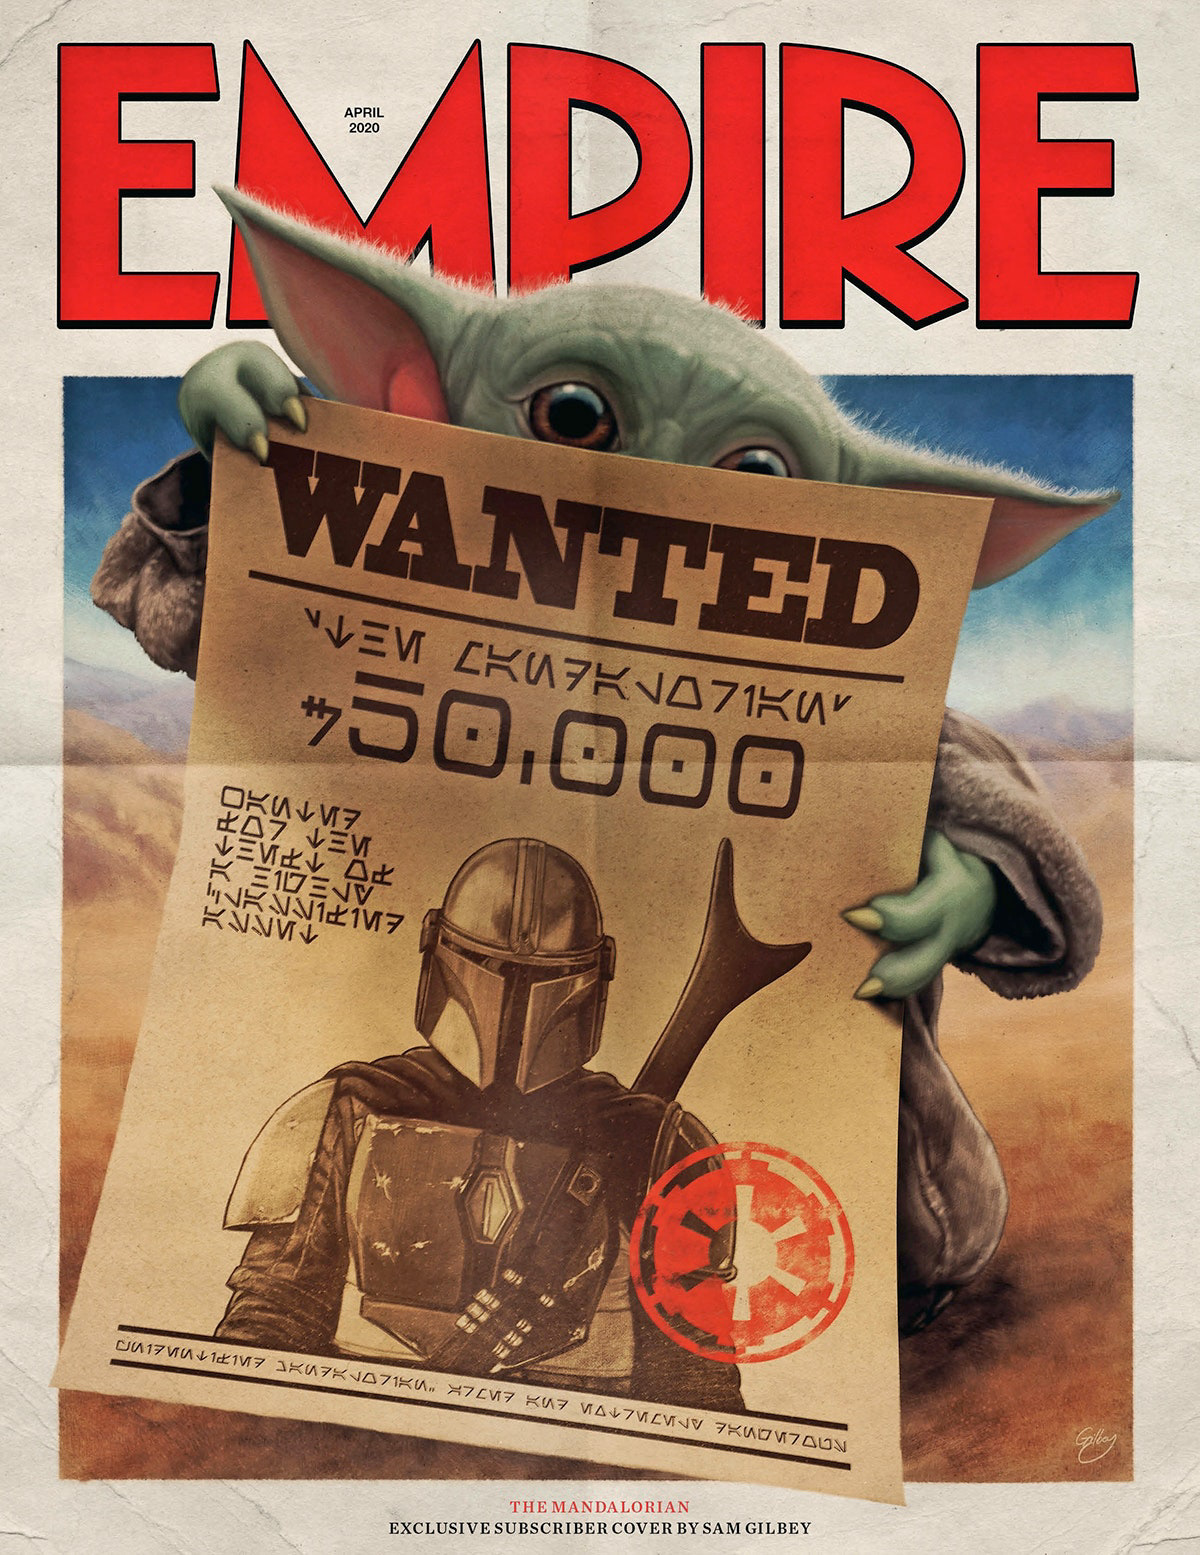 Cinema Cover Art Film   Magazine Covers movie poster Movies Sci Fi star wars